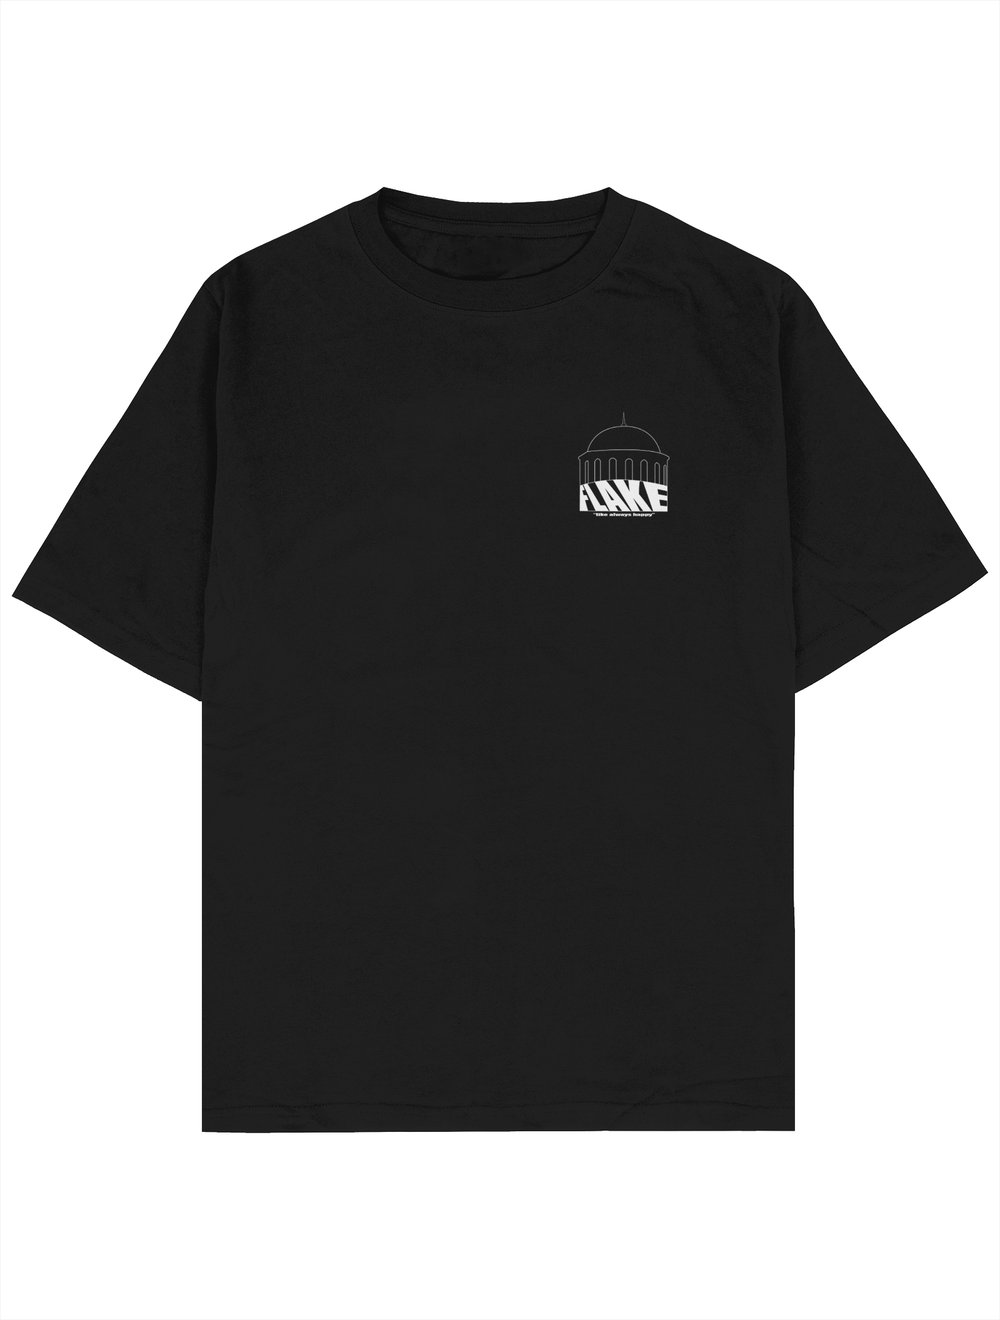 Flake Oversize T-Shirt 7821730